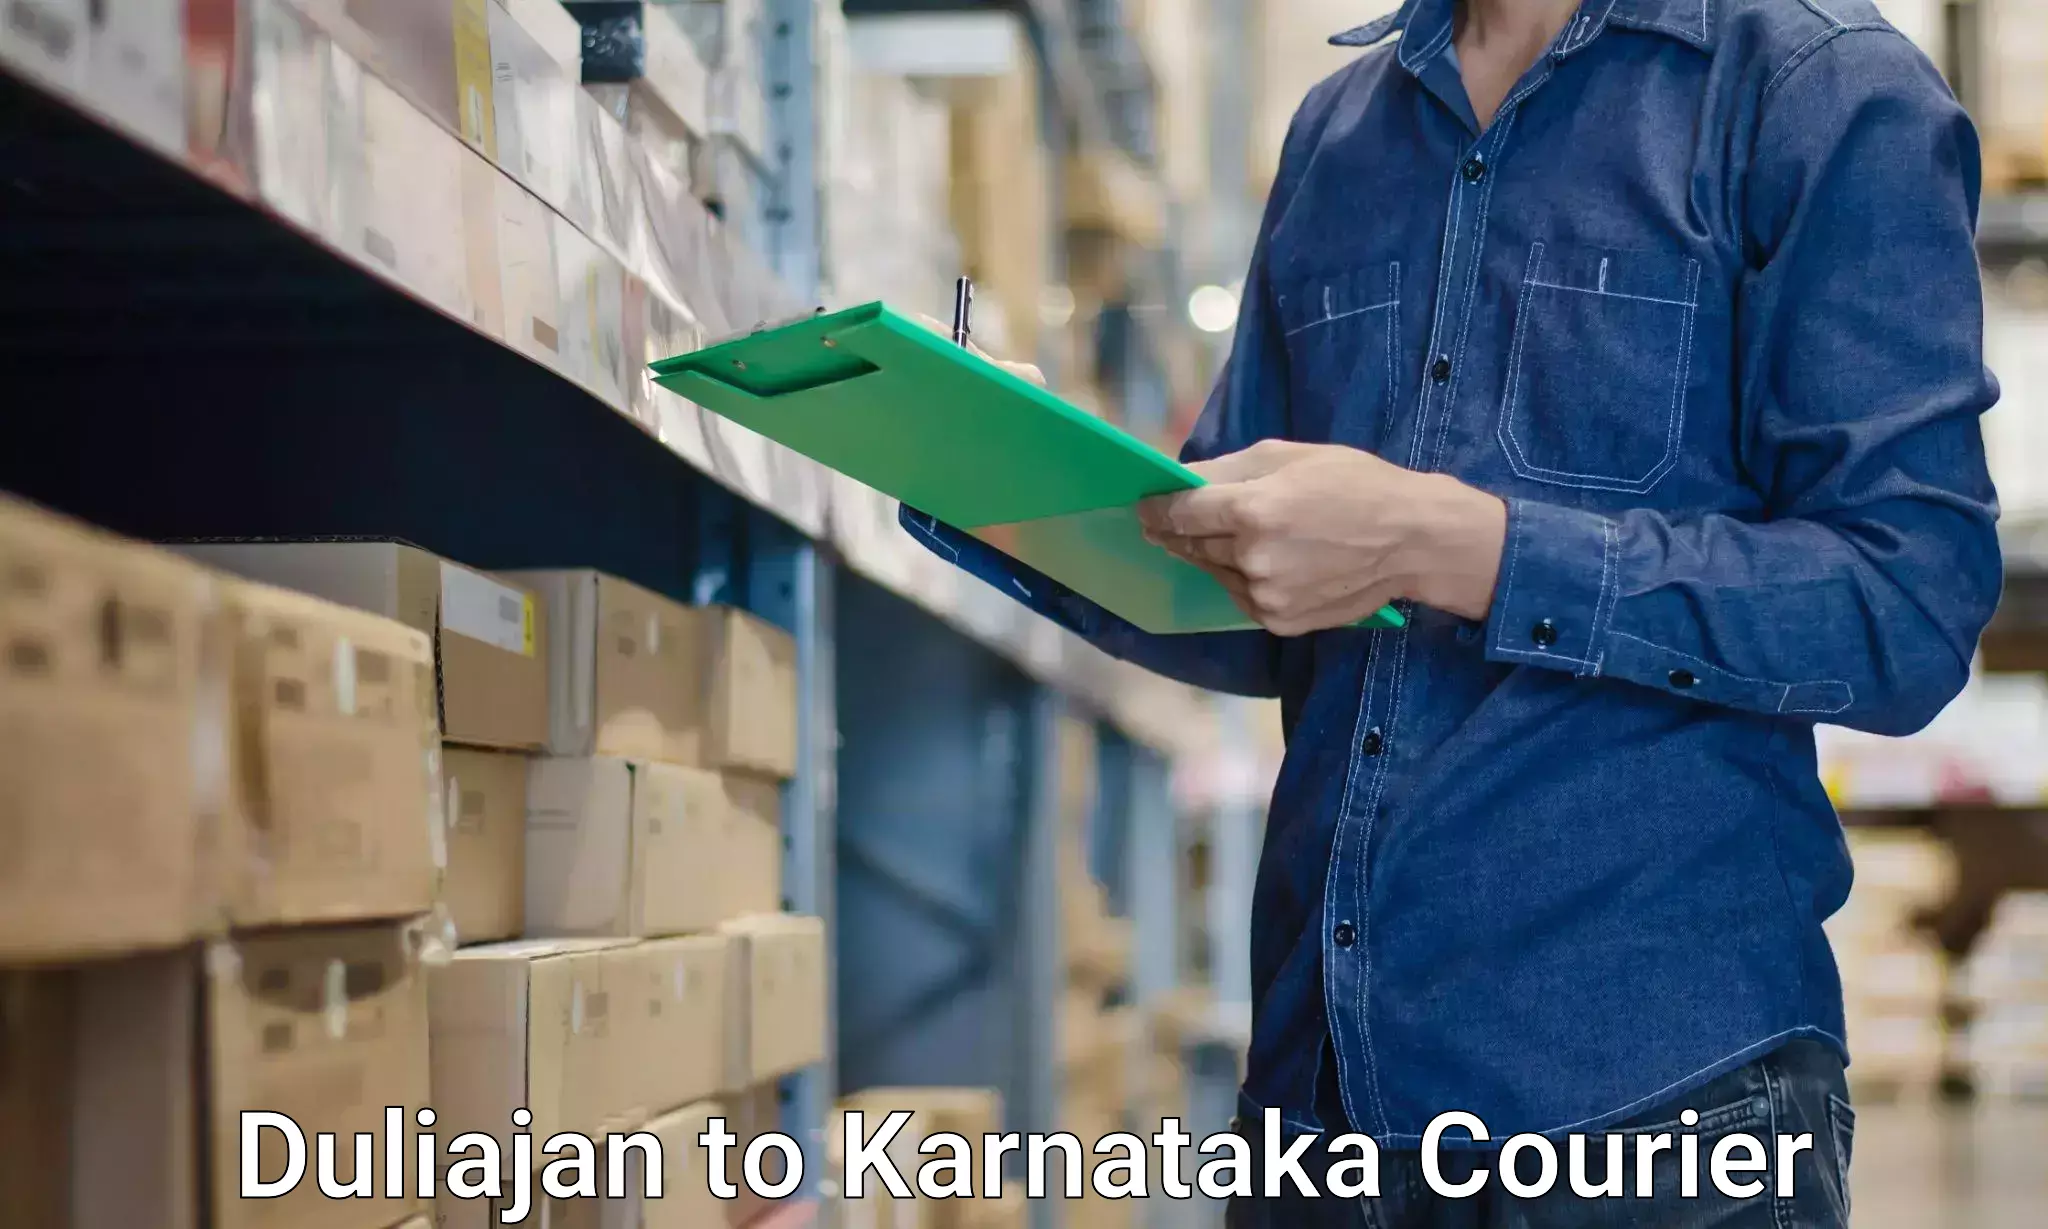 Professional moving company Duliajan to Karnataka